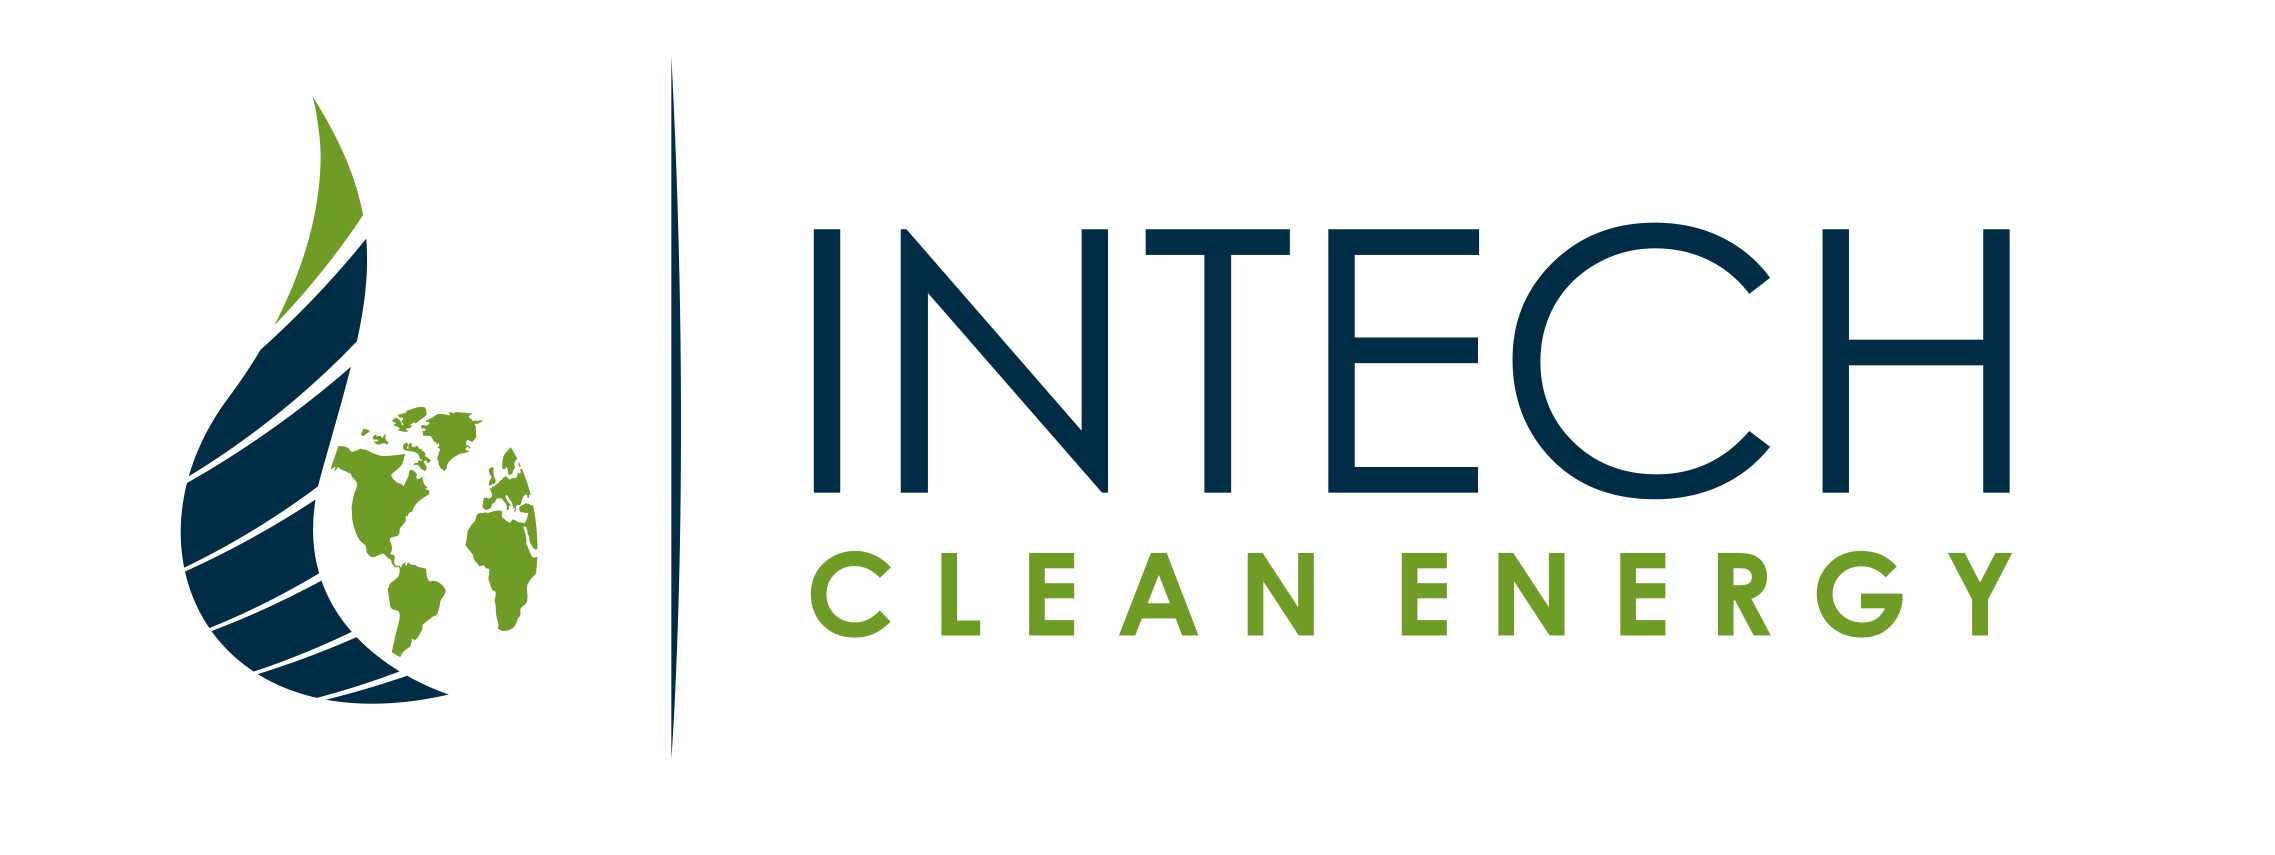 Intech clean energy